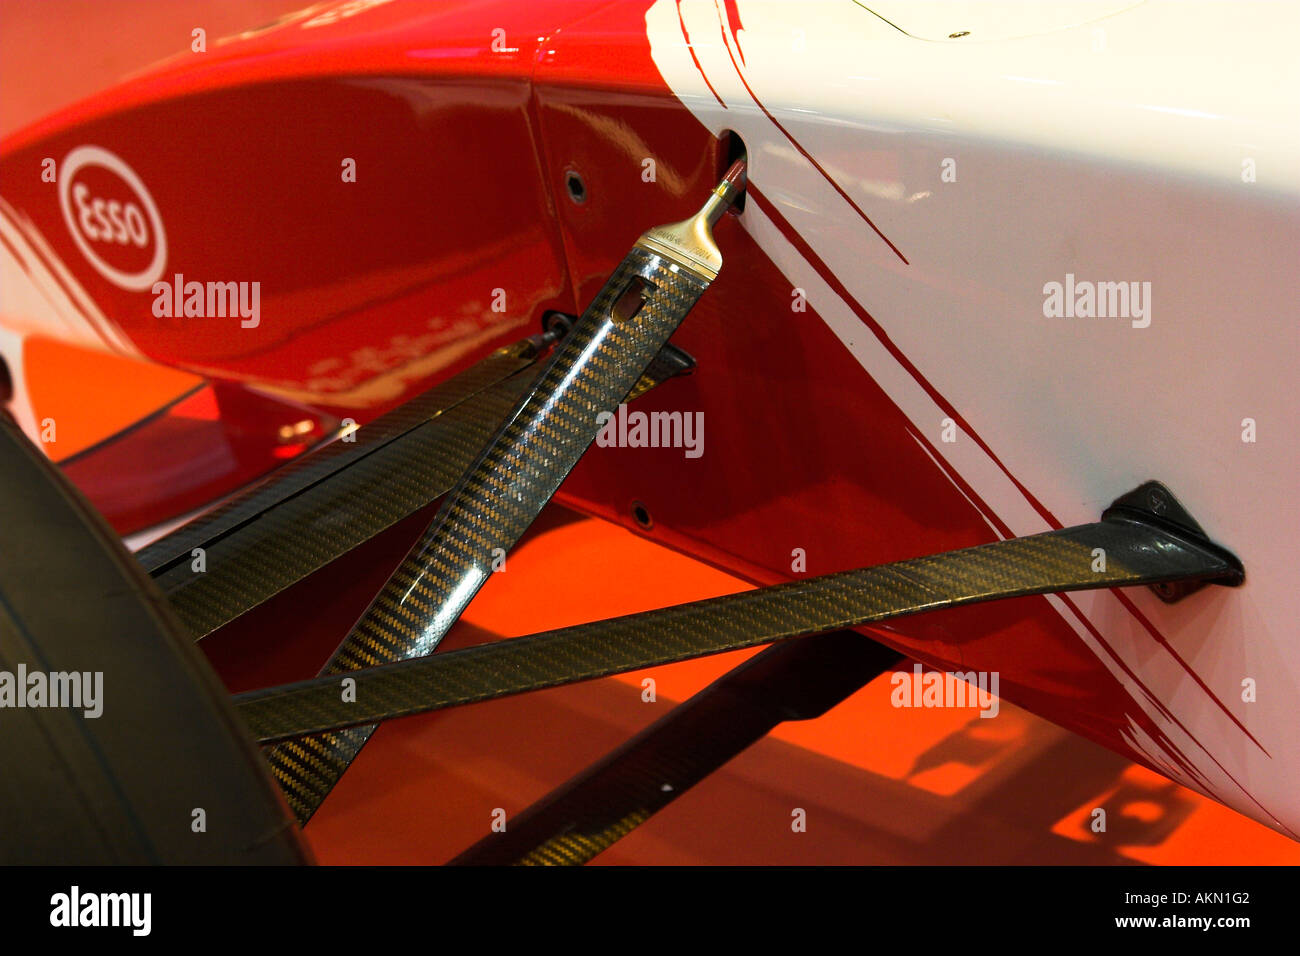 Formel Eins Auto Kohlefaser Fahrwerk Querlenker Stockfotografie - Alamy